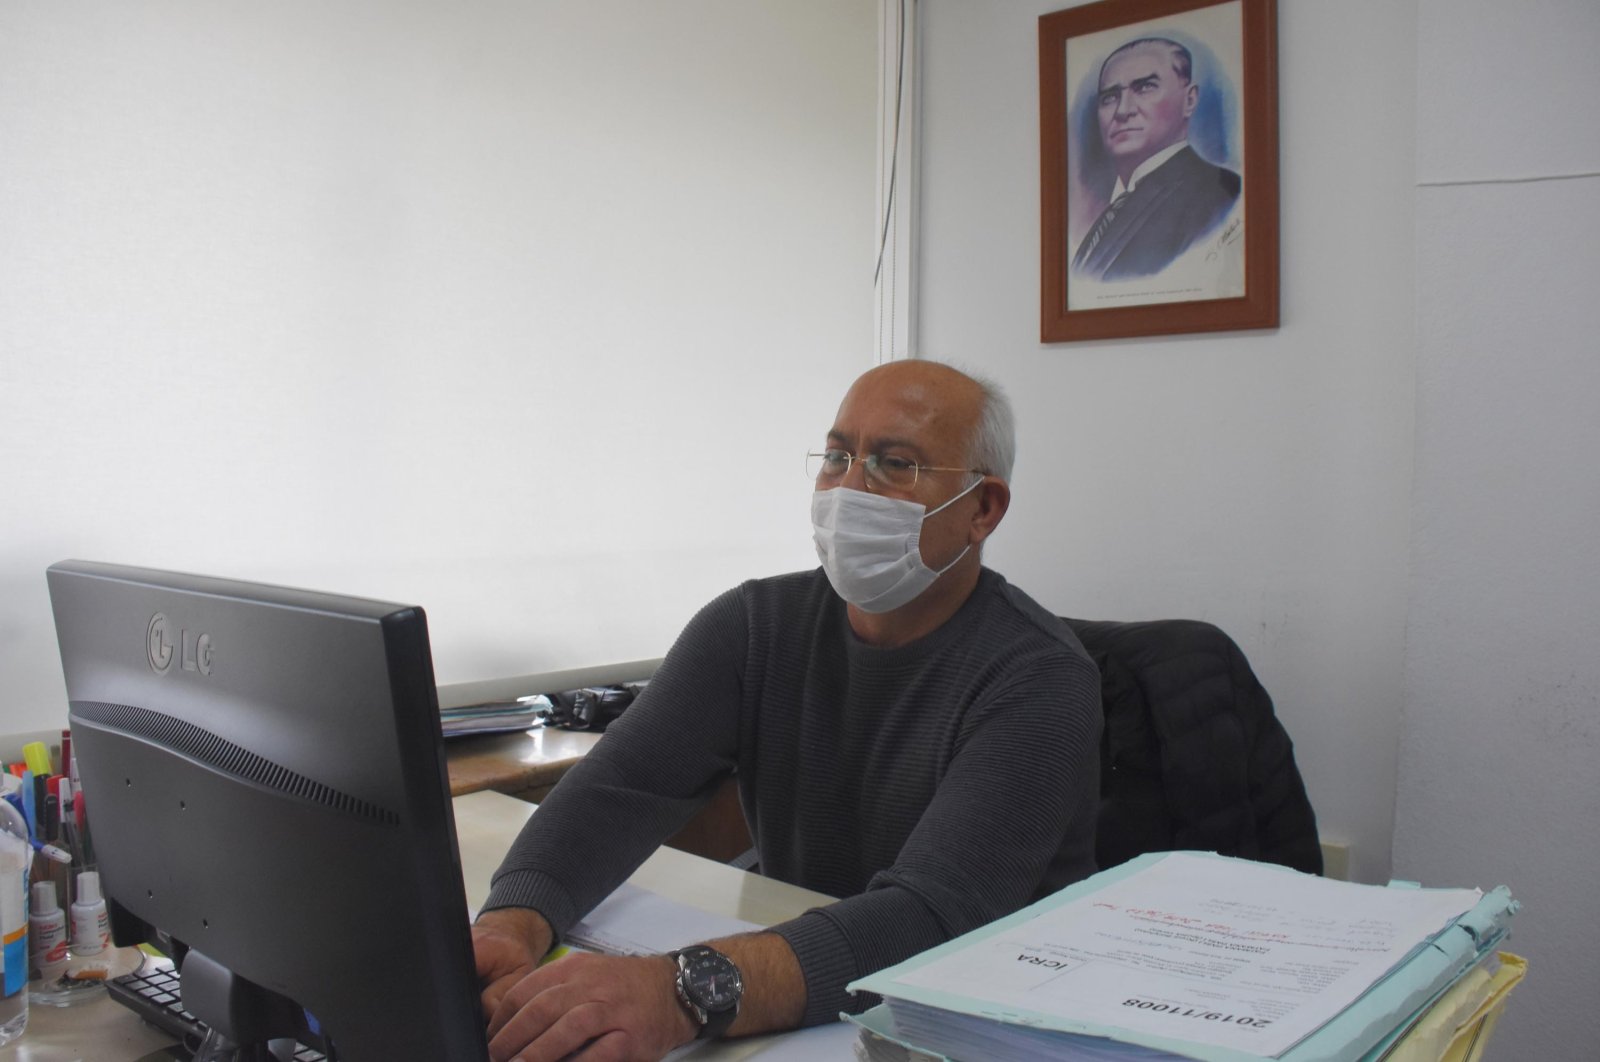 Atılay Özün works in his office, Konak district, Izmir, Turkey, Nov. 5, 2020. (DHA Photo)